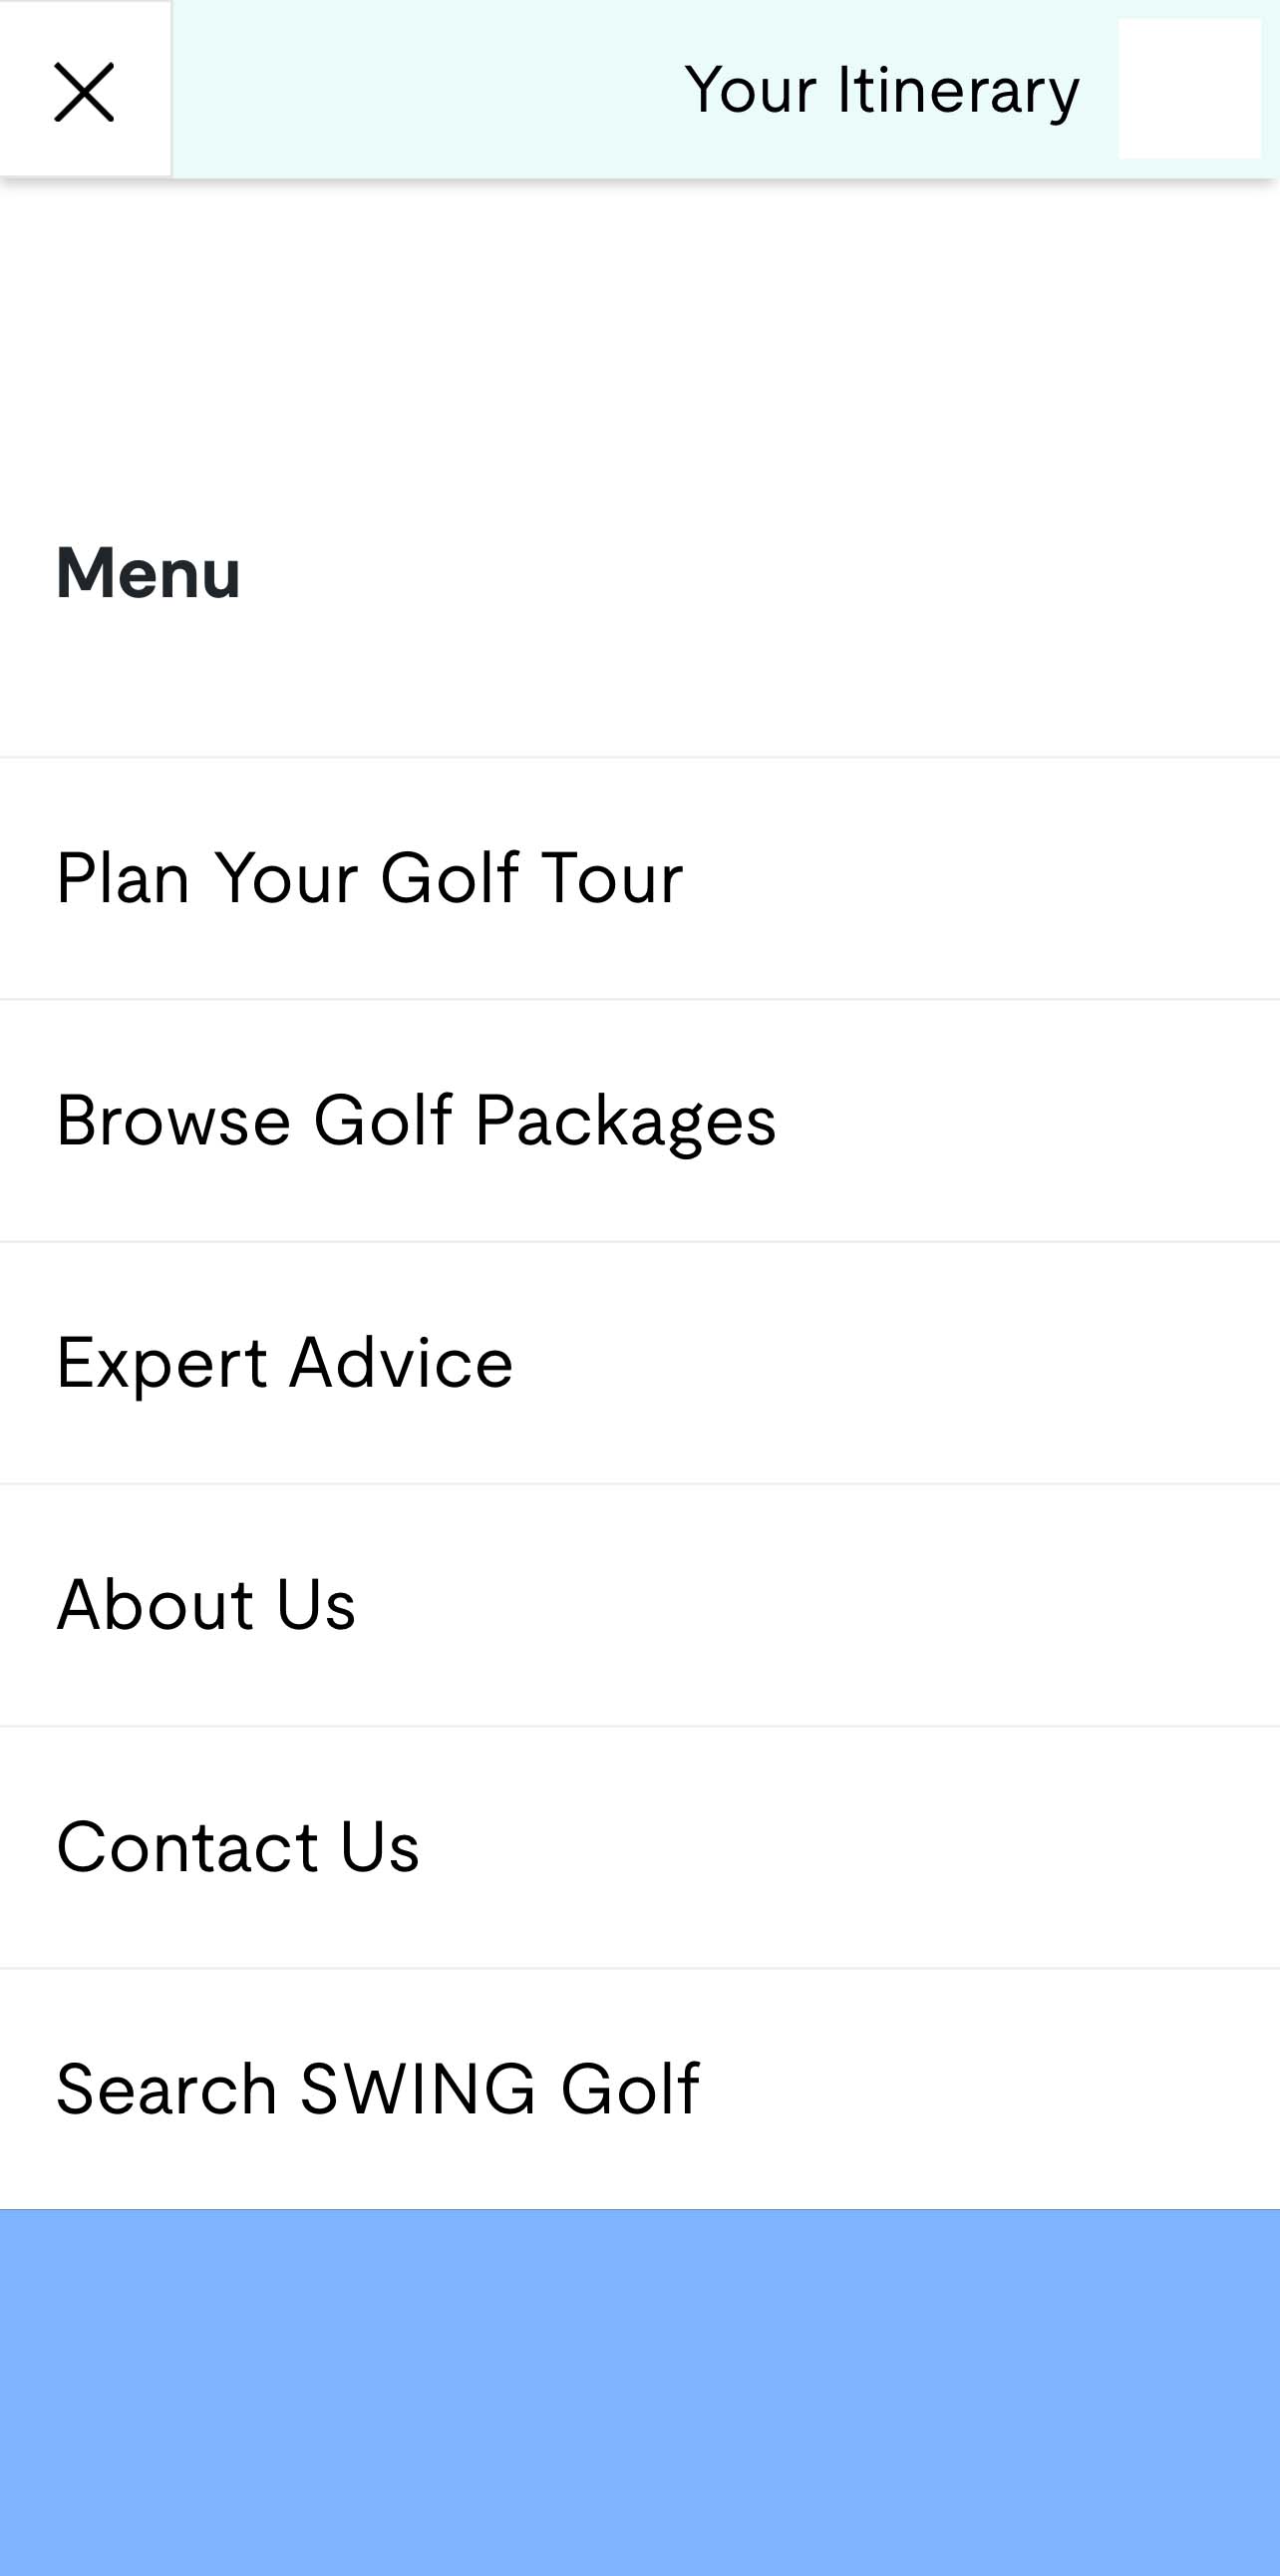 SWING Golf Mobile Web Design Menu